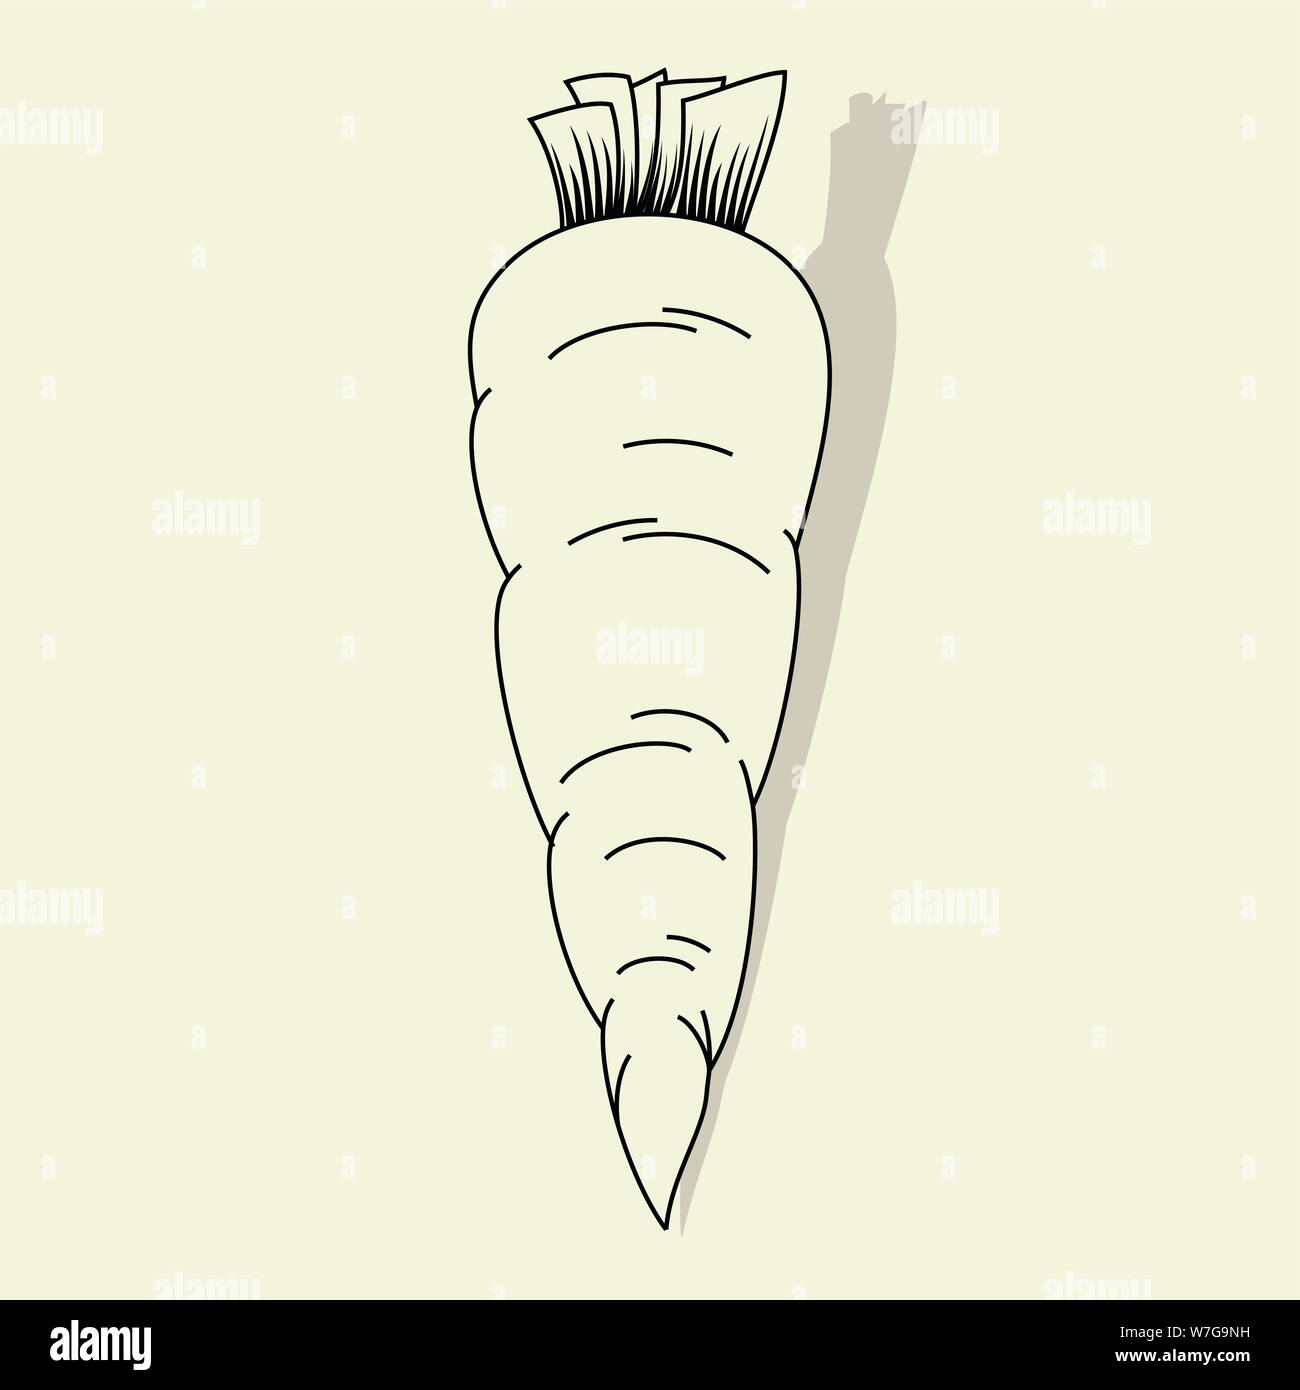 Carrot Vector cartoon with black line (no color) concept design Stock Vector